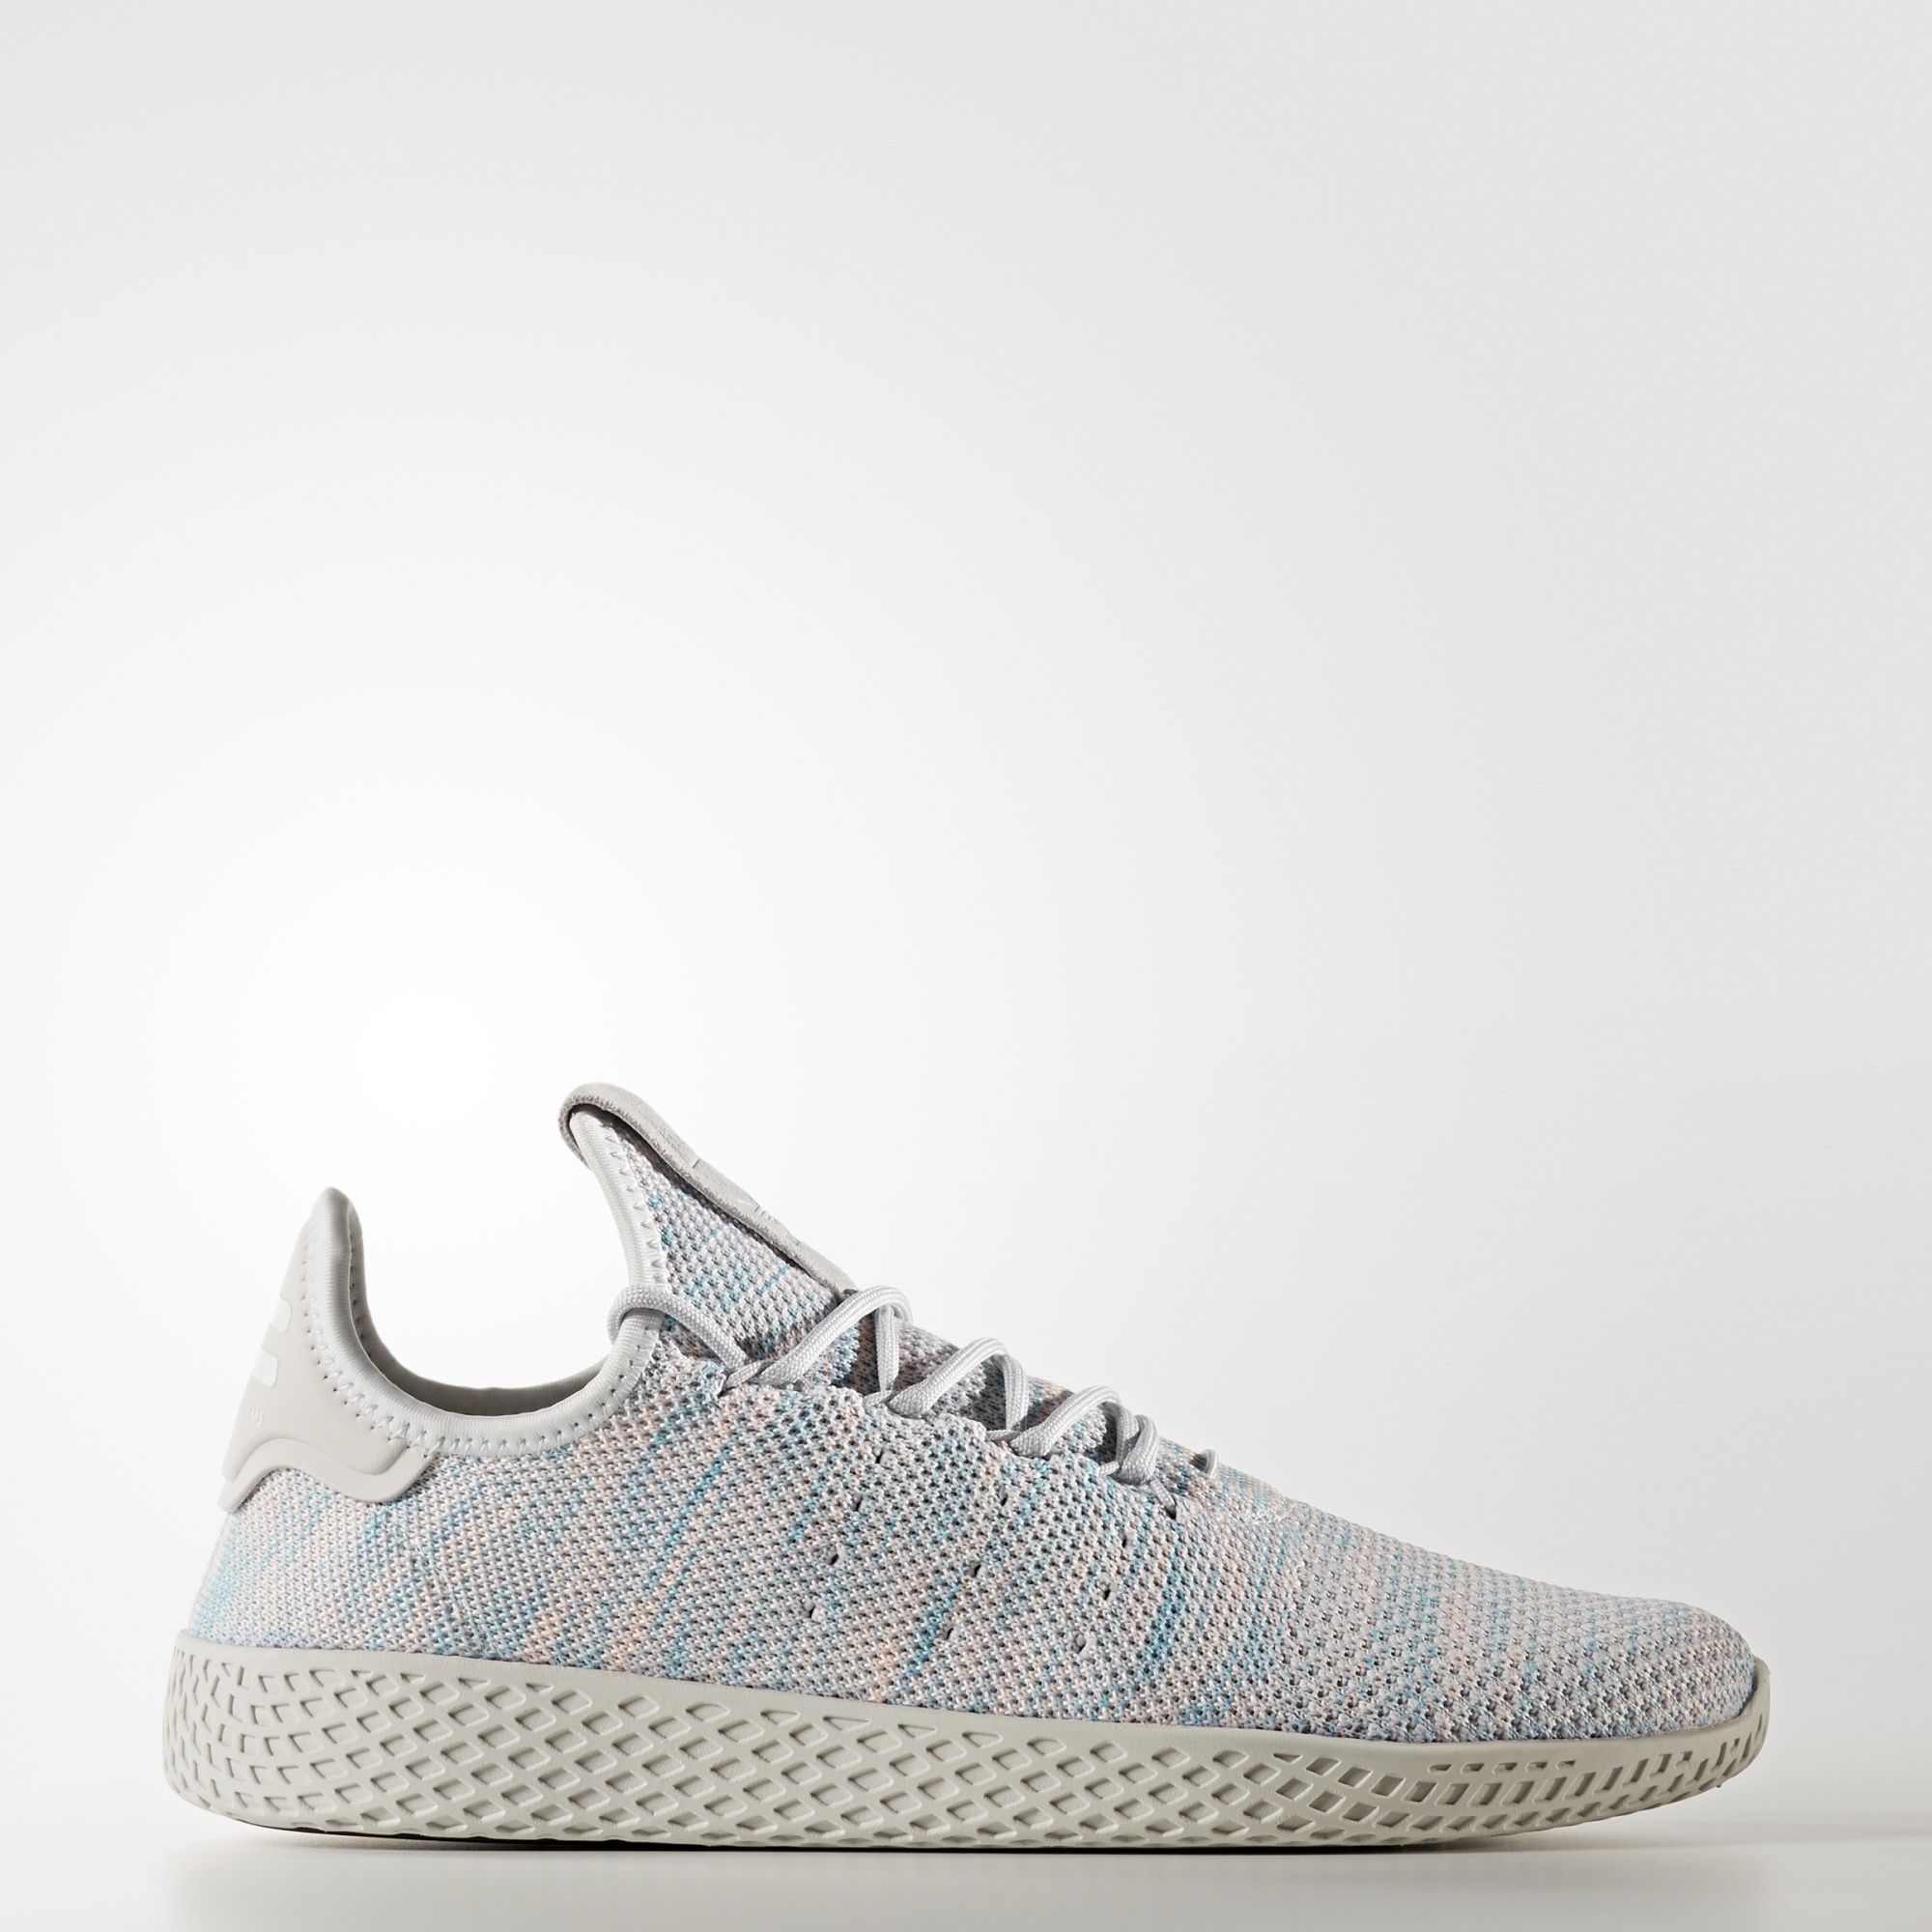 adidas-pharrell-williams-tennis-hu-blue-light-grey-2